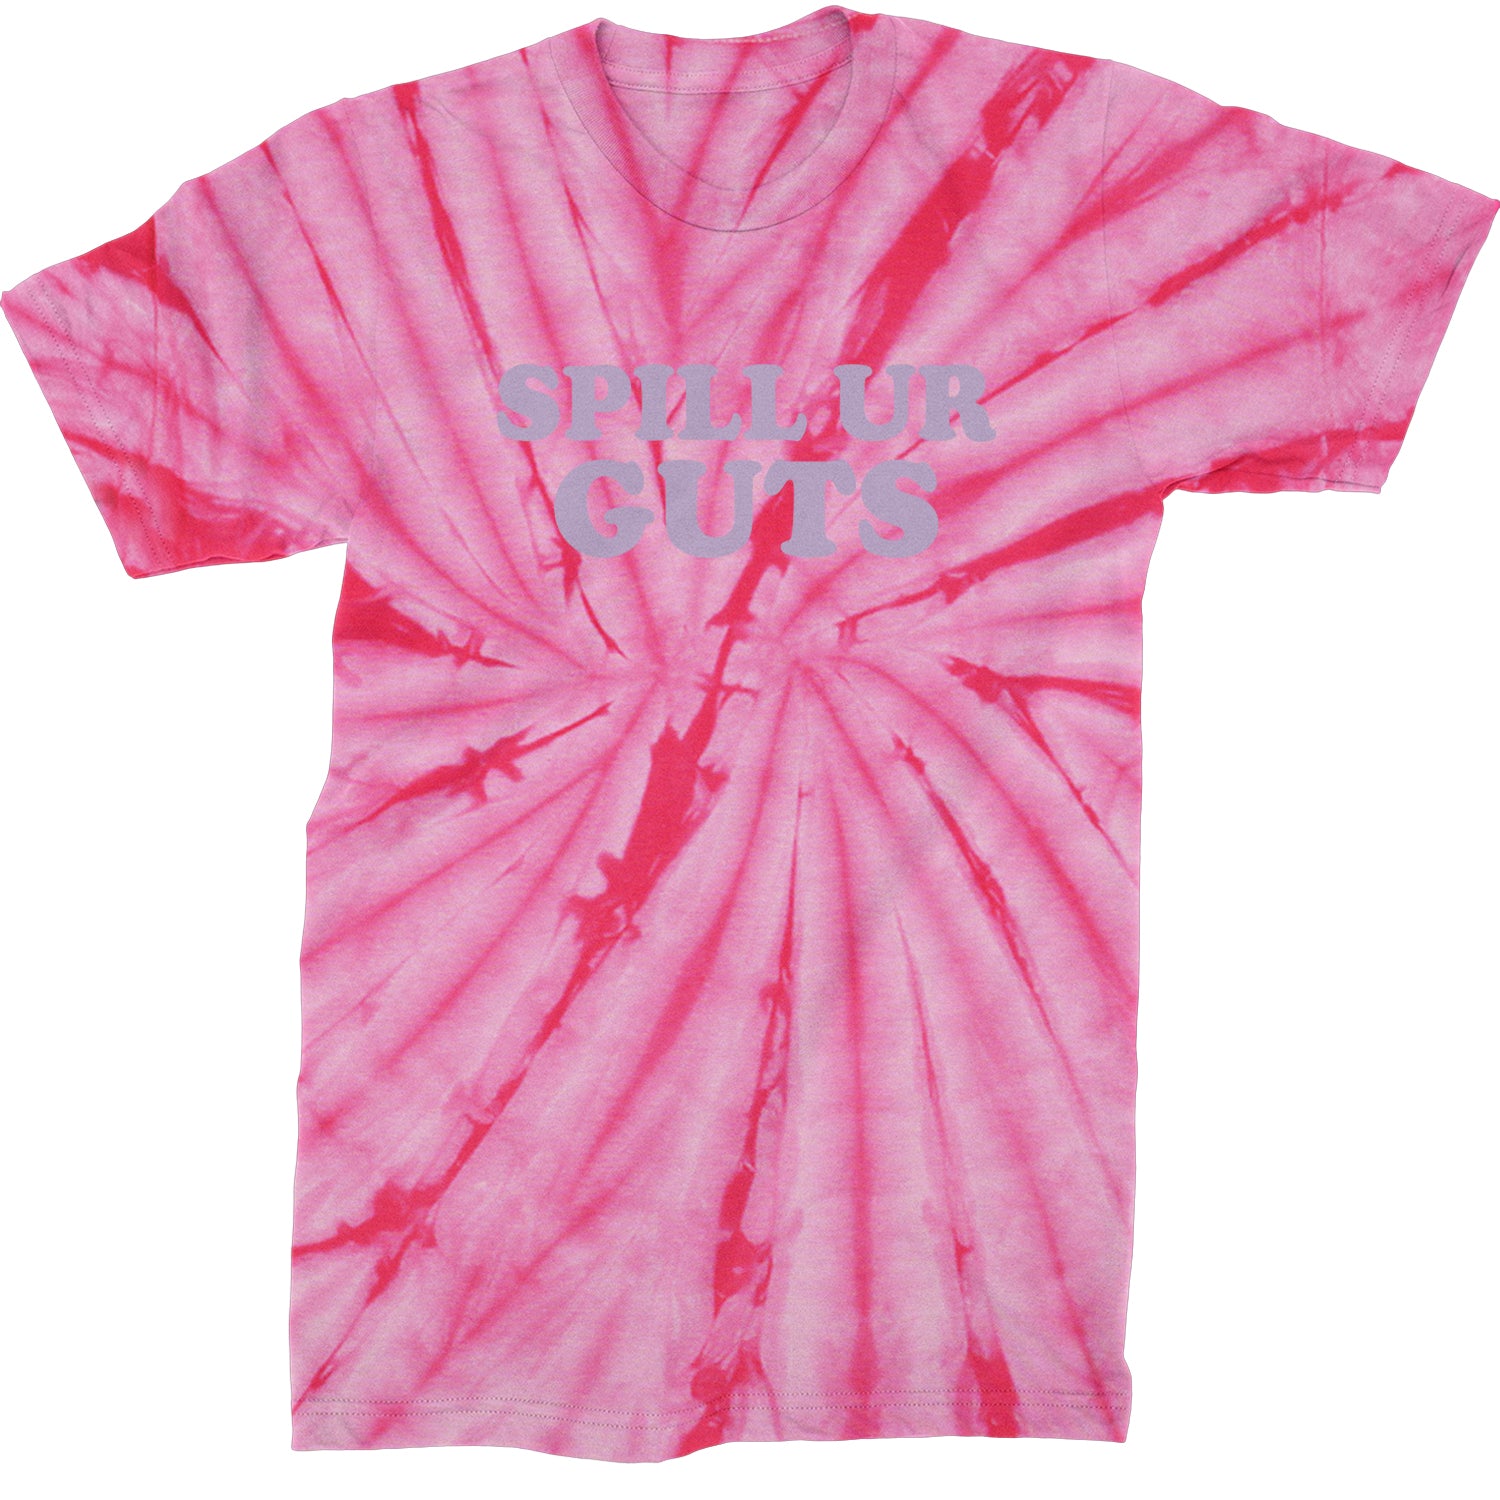 Spill Ur Guts Music Mens T-shirt Tie-Dye Spider Pink